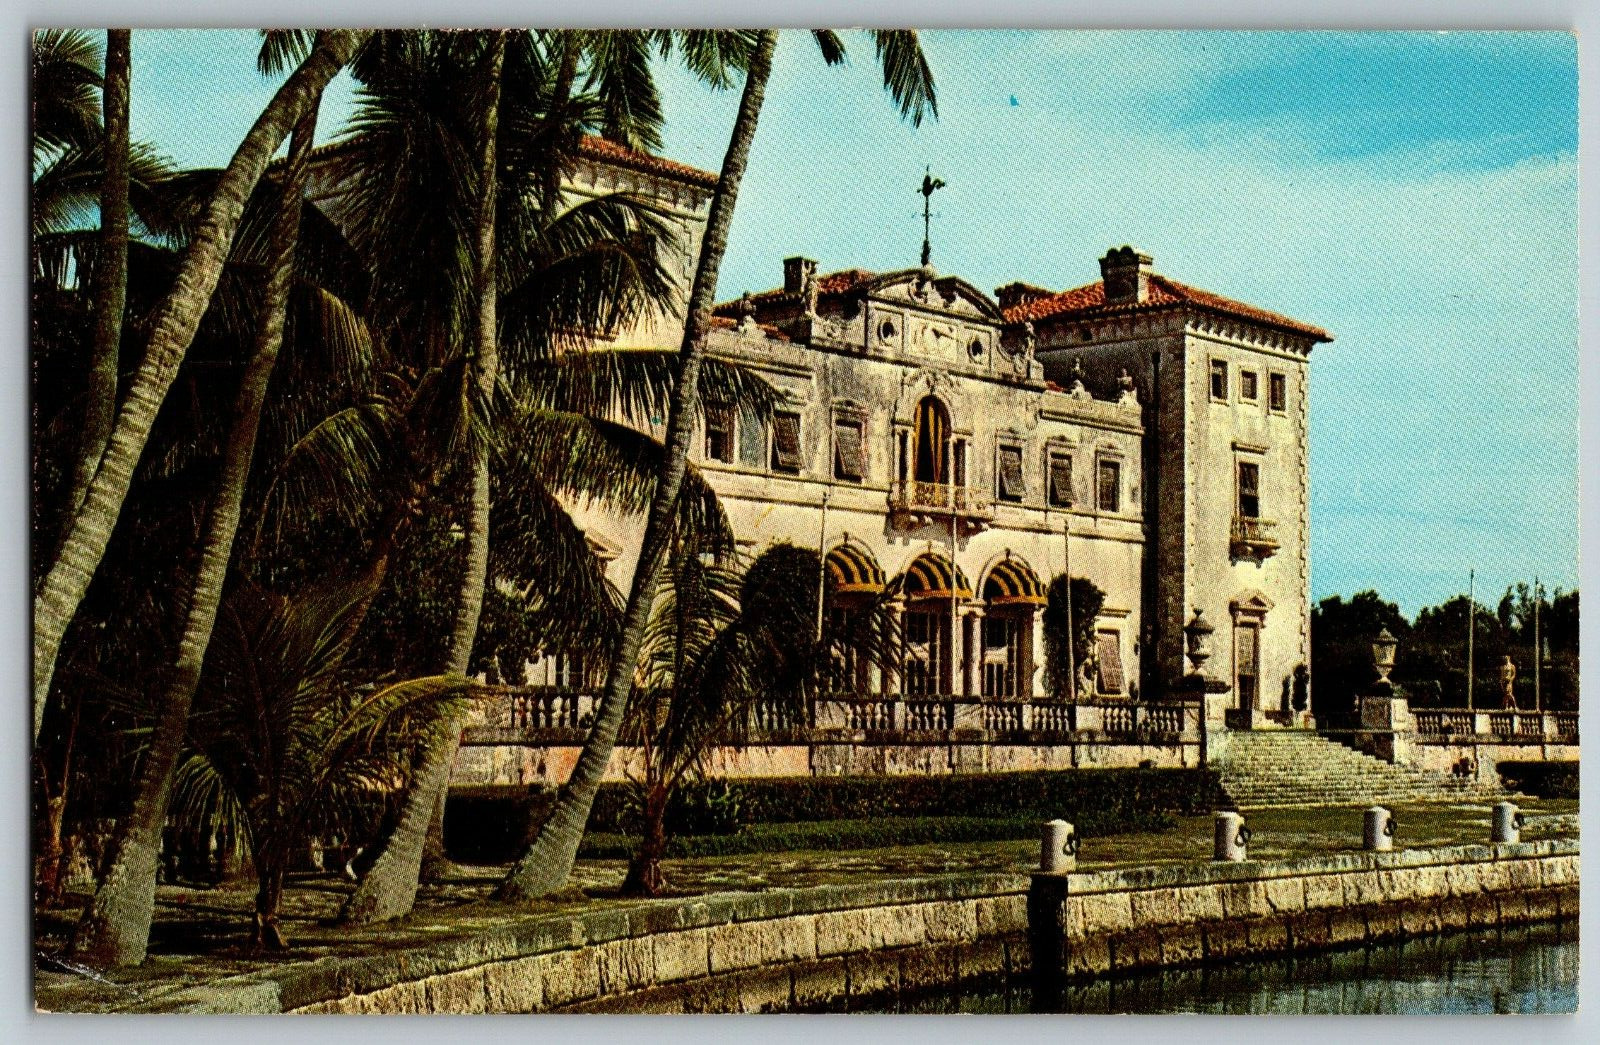 Miami, Florida - Fabulous Italian Palazzo on Biscayne Bay - Vintage Postcard